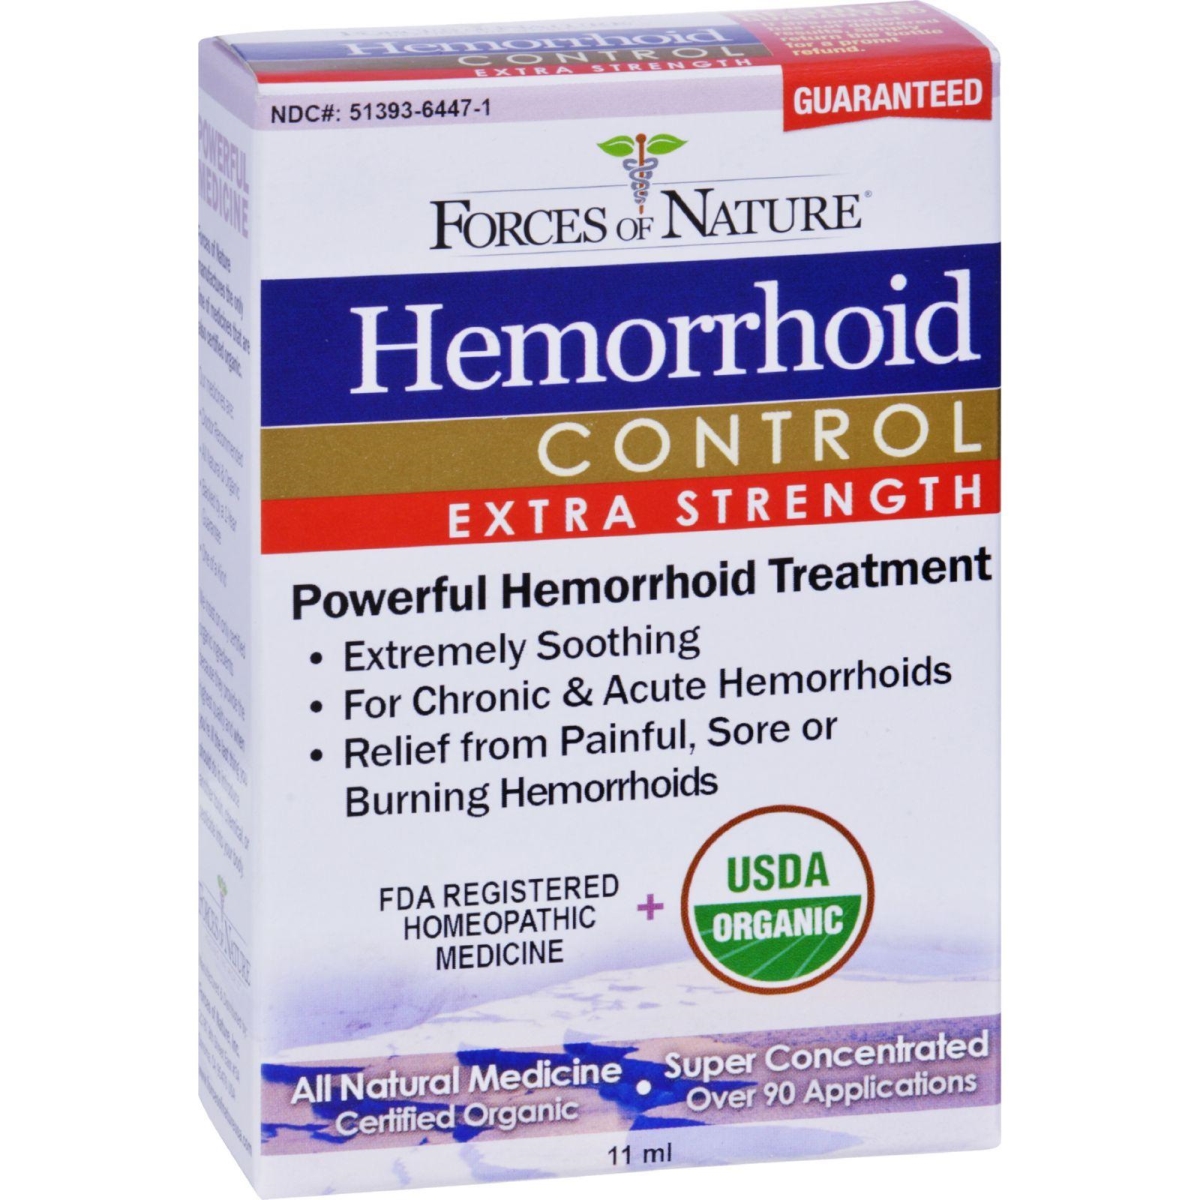 Hg1025238 11 Ml Organic Hemorrhoid Control, Extra Strength